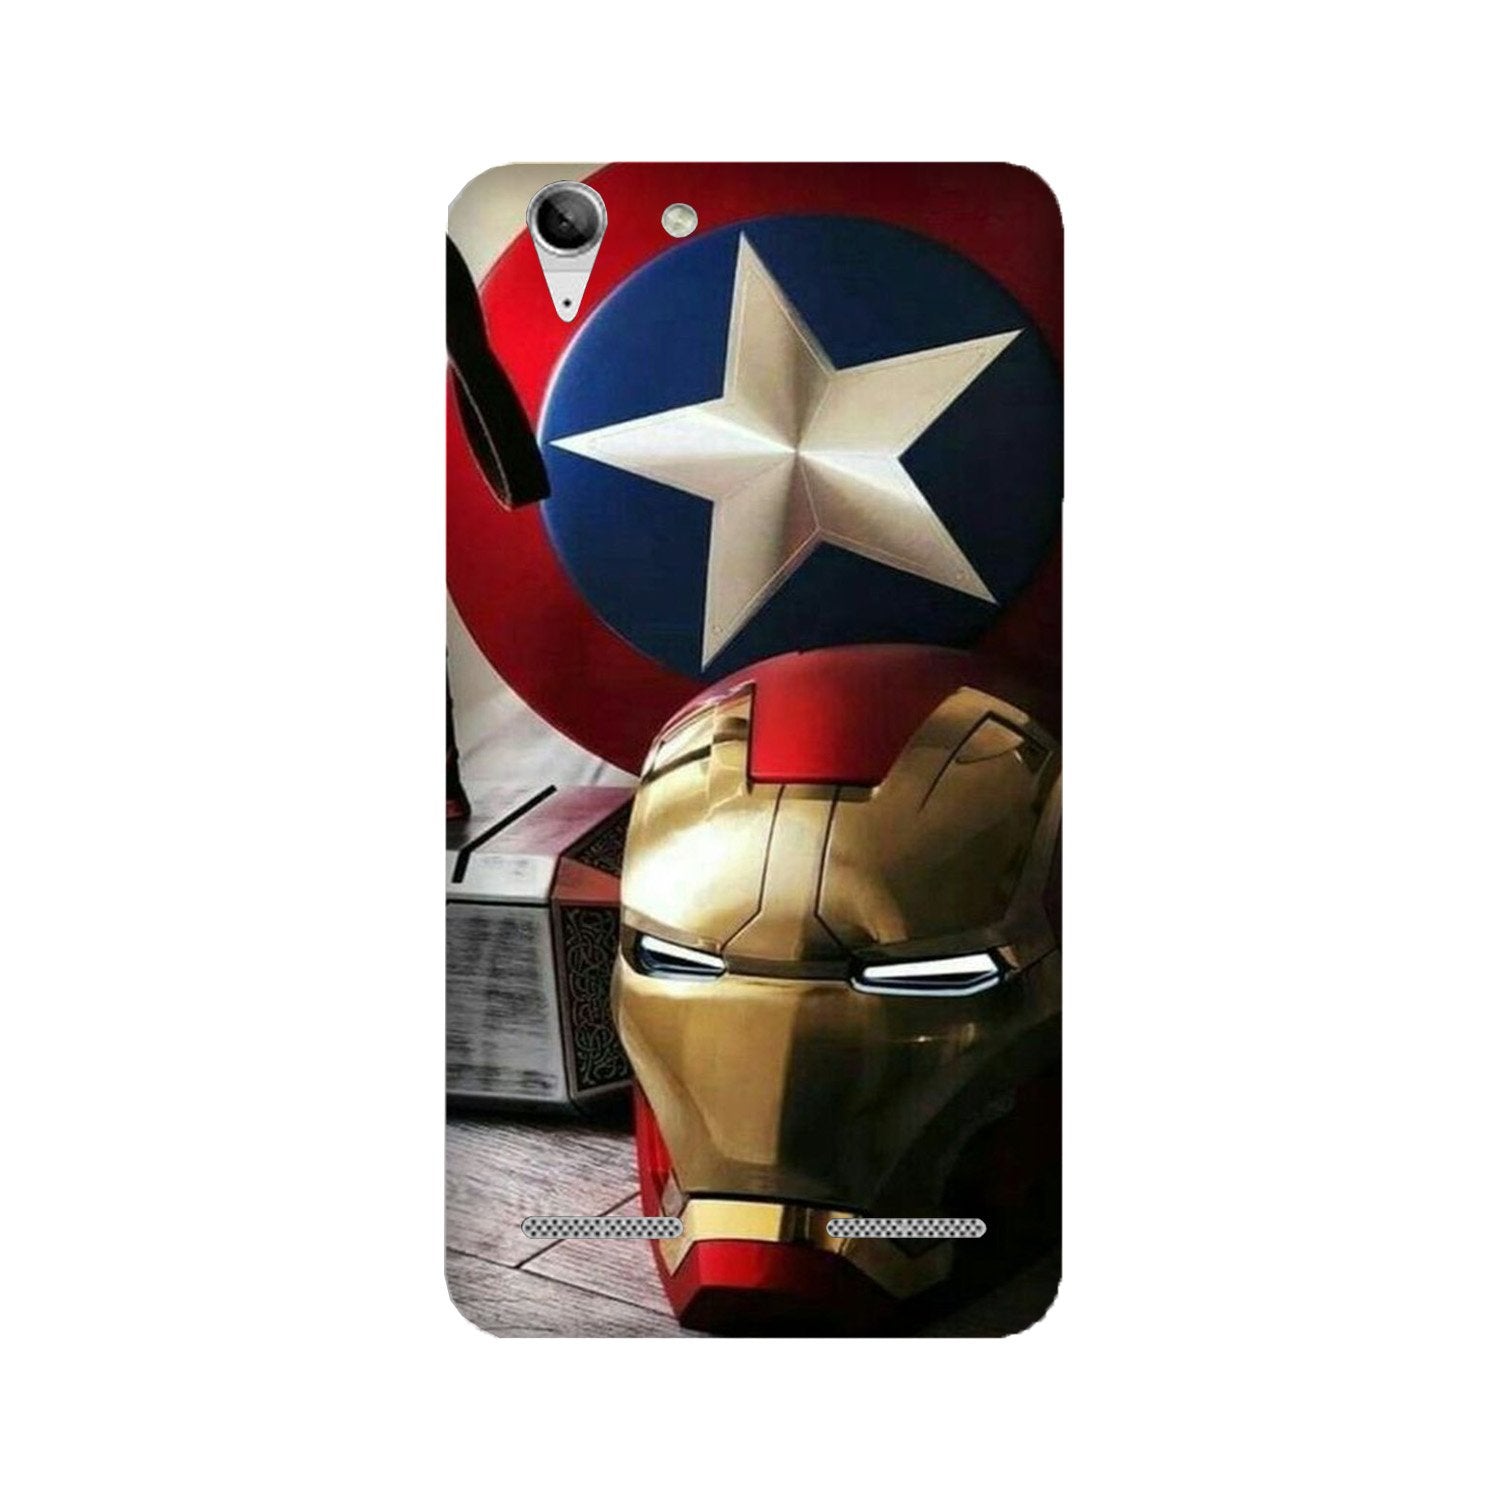 Ironman Captain America Case for Lenovo K5 / K5 Plus (Design No. 254)